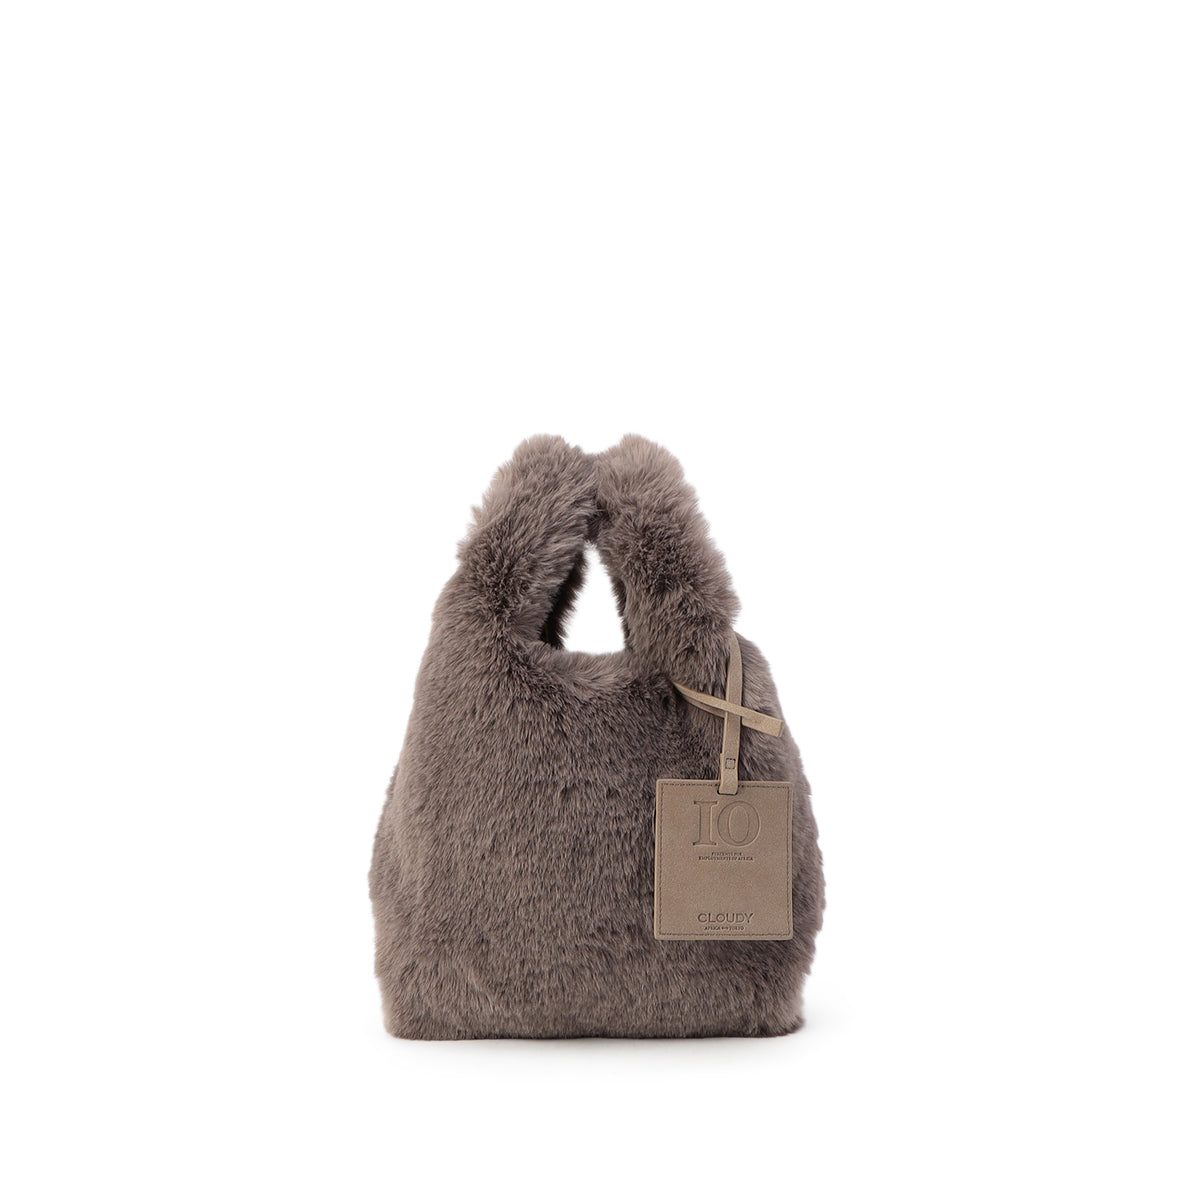 Cloudy Eco Fur bag クラウディ エコファーバック - バッグ